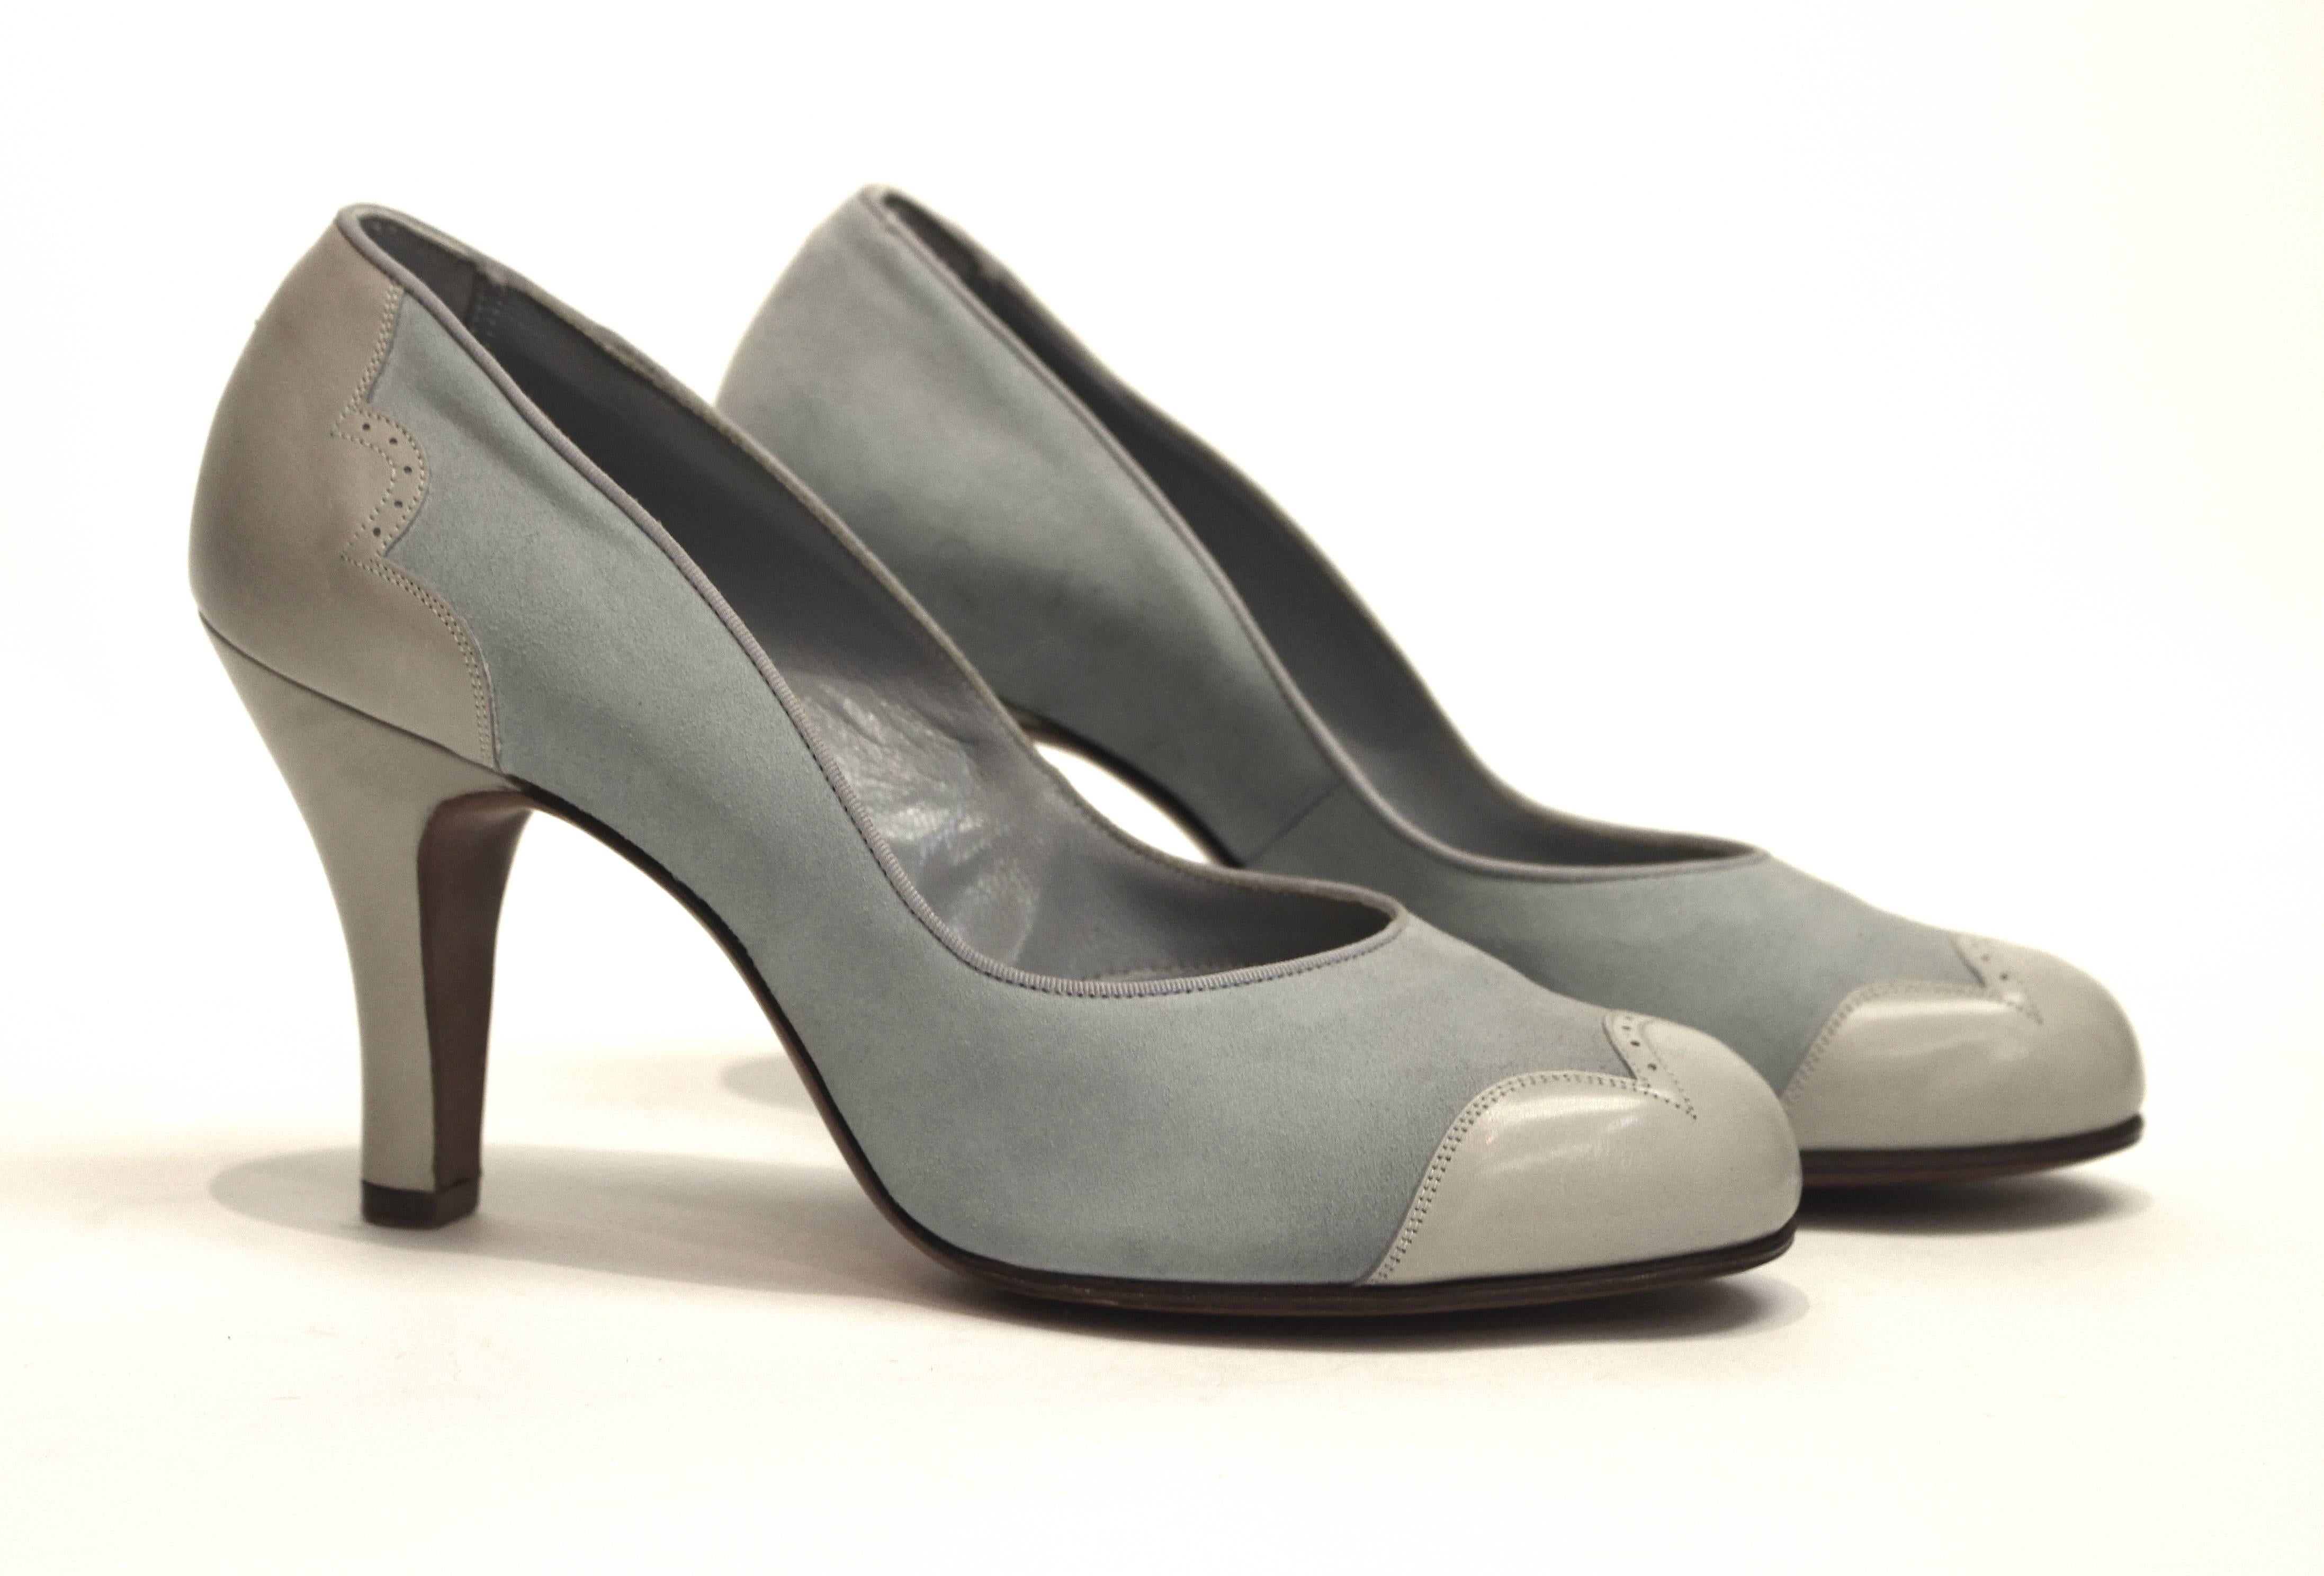 1950s pale blue suede spectator heels. 

Measurements:
Insole (toe to heel): 9 1/2